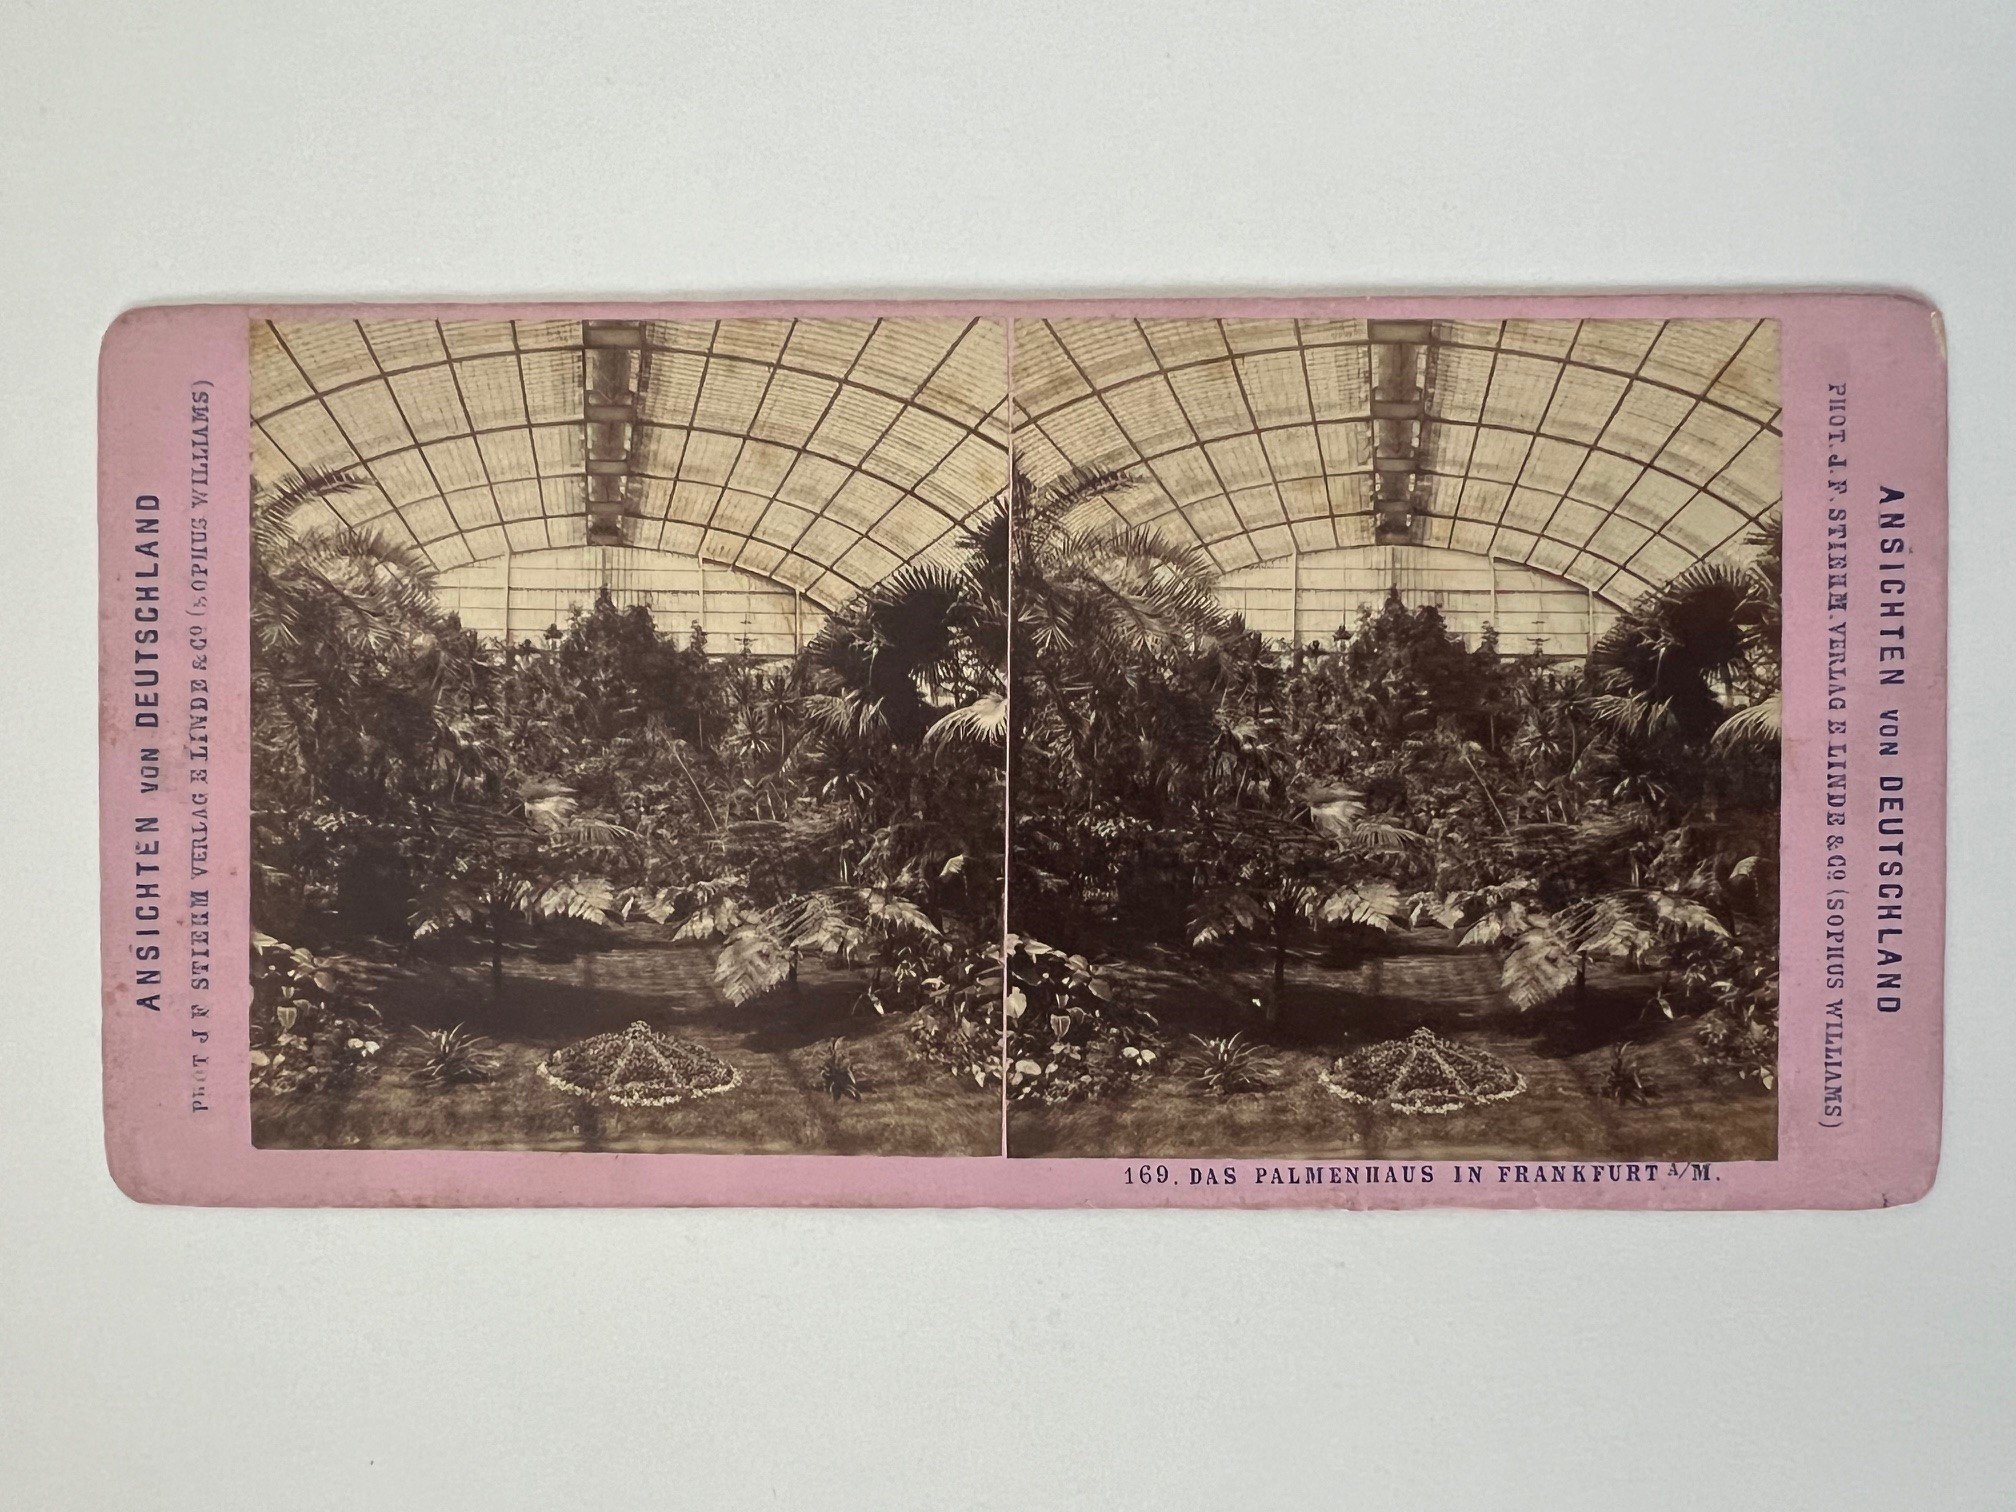 Stereobild, Johann Friedrich Stiehm, Frankfurt, Nr. 169, Das Palmenhaus, ca. 1880. (Taunus-Rhein-Main - Regionalgeschichtliche Sammlung Dr. Stefan Naas CC BY-NC-SA)